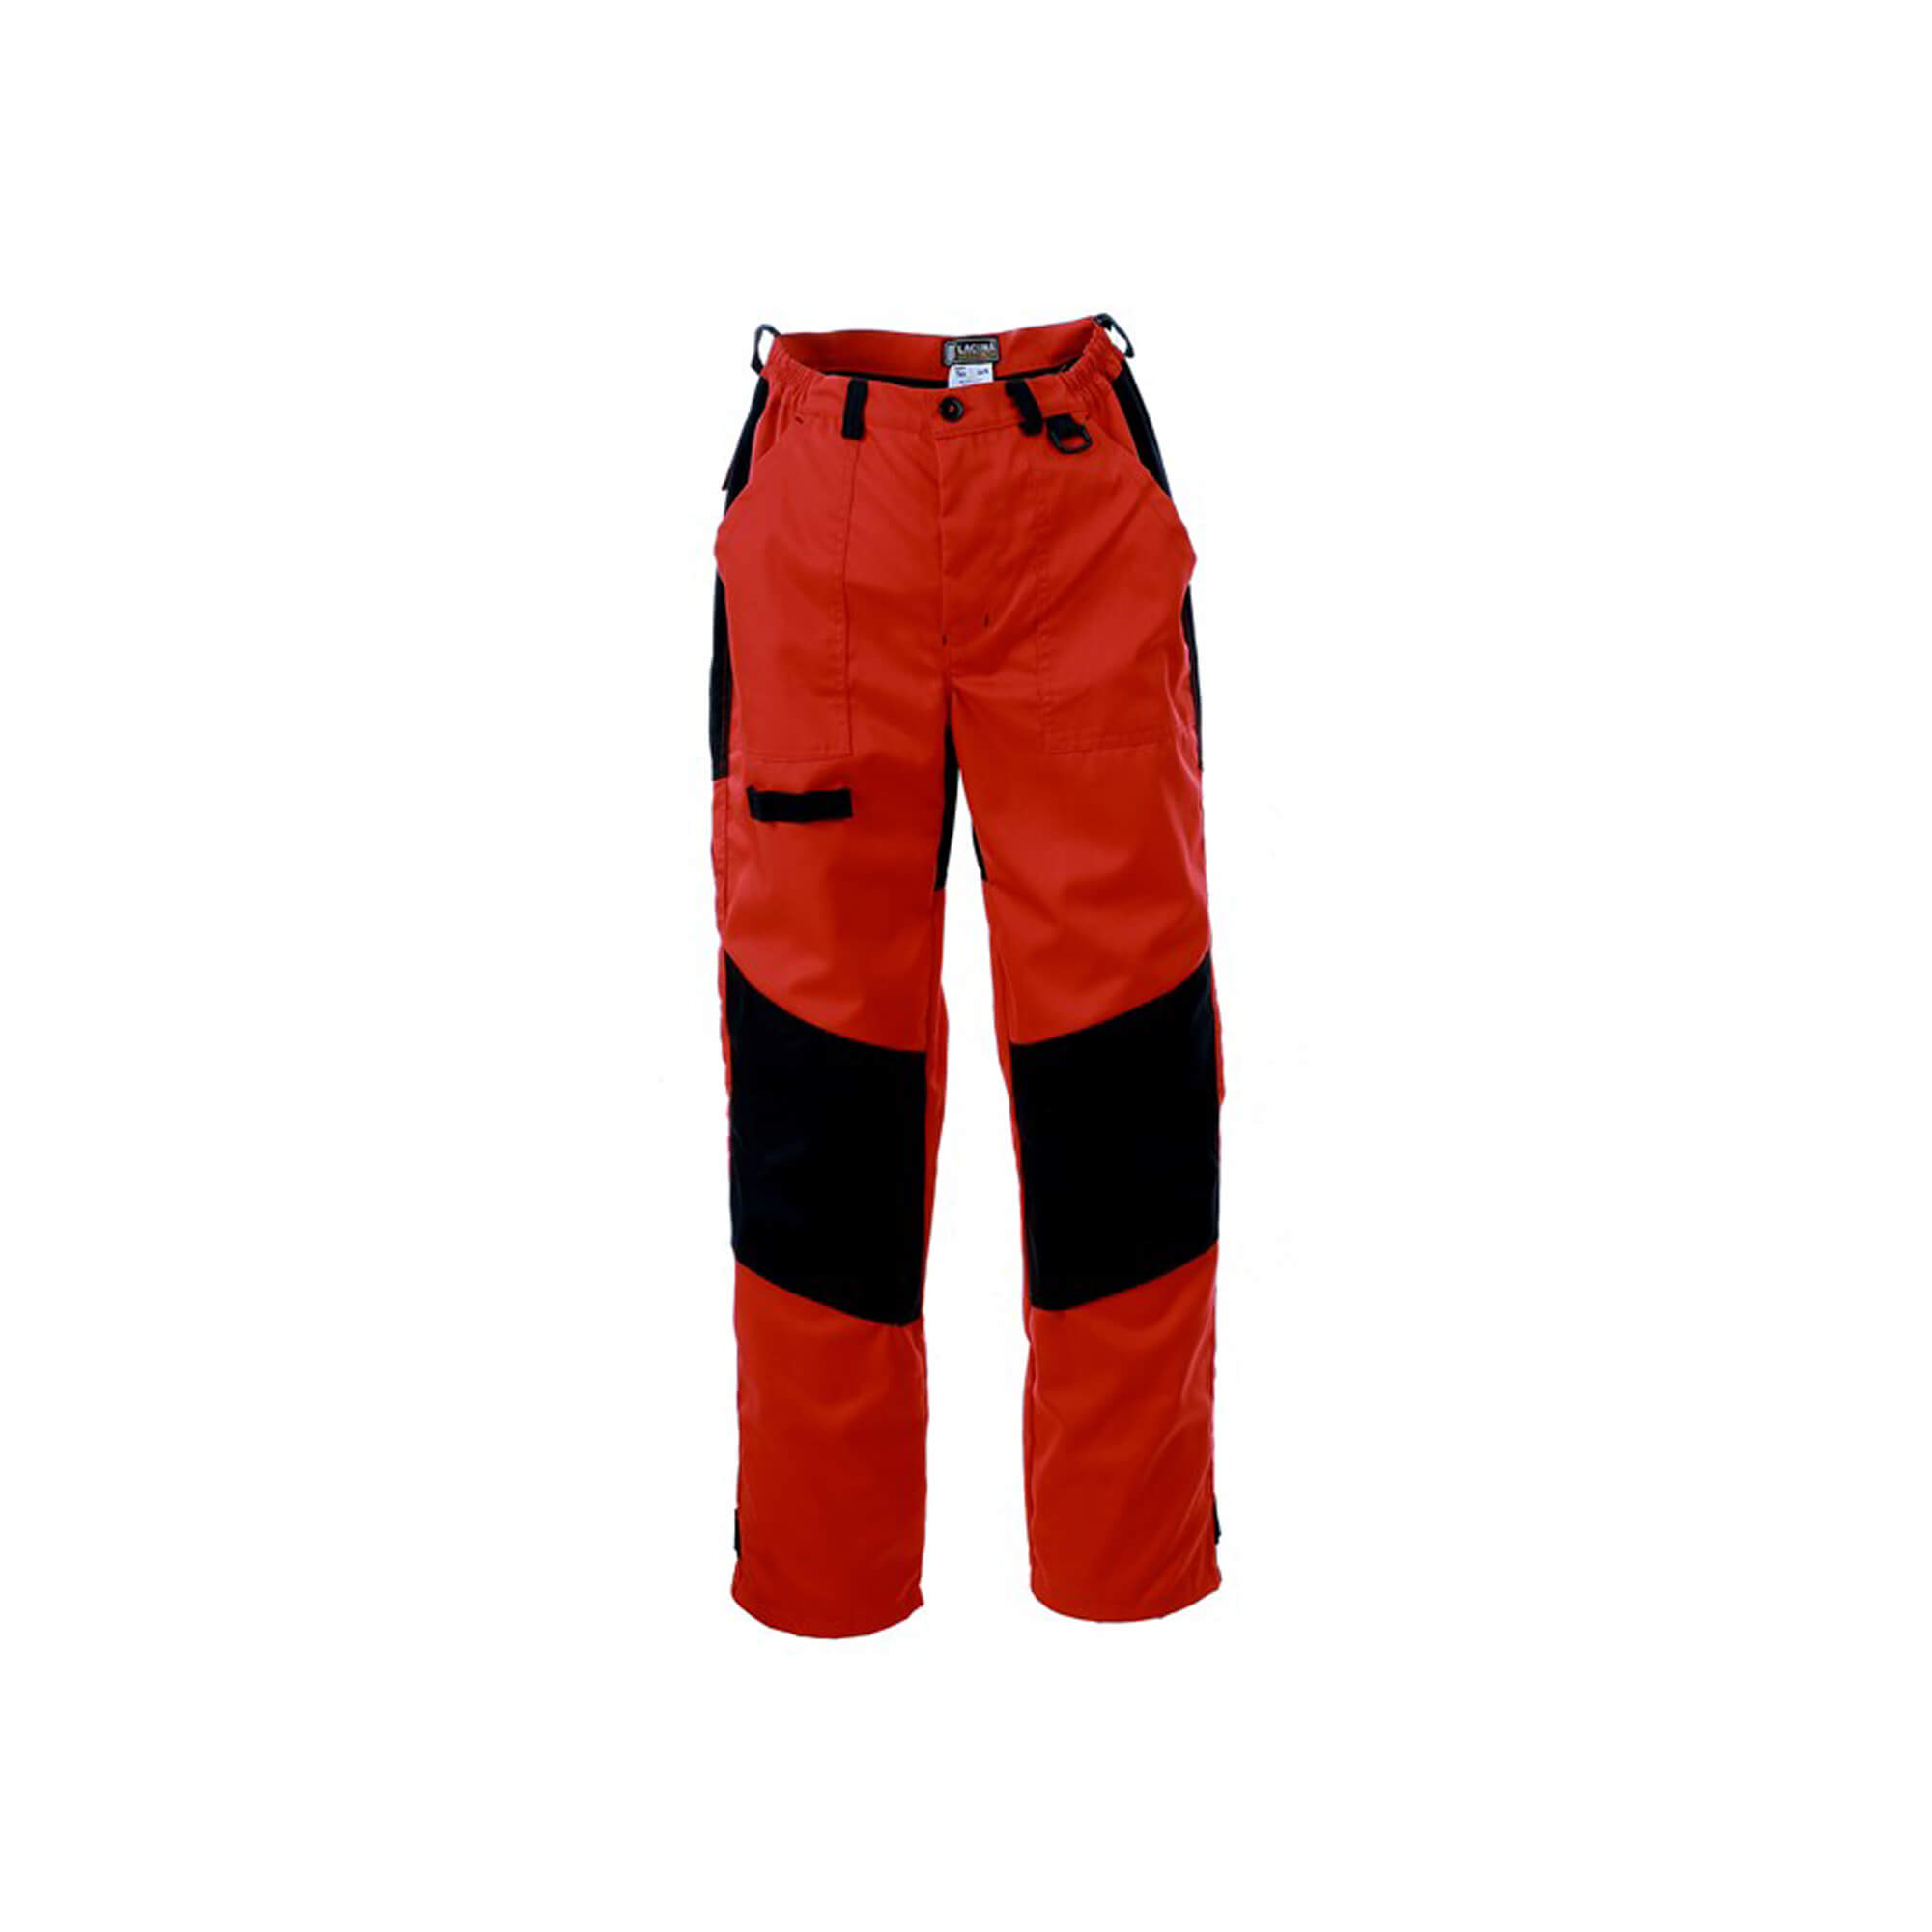 Work pants classic Spektar, red